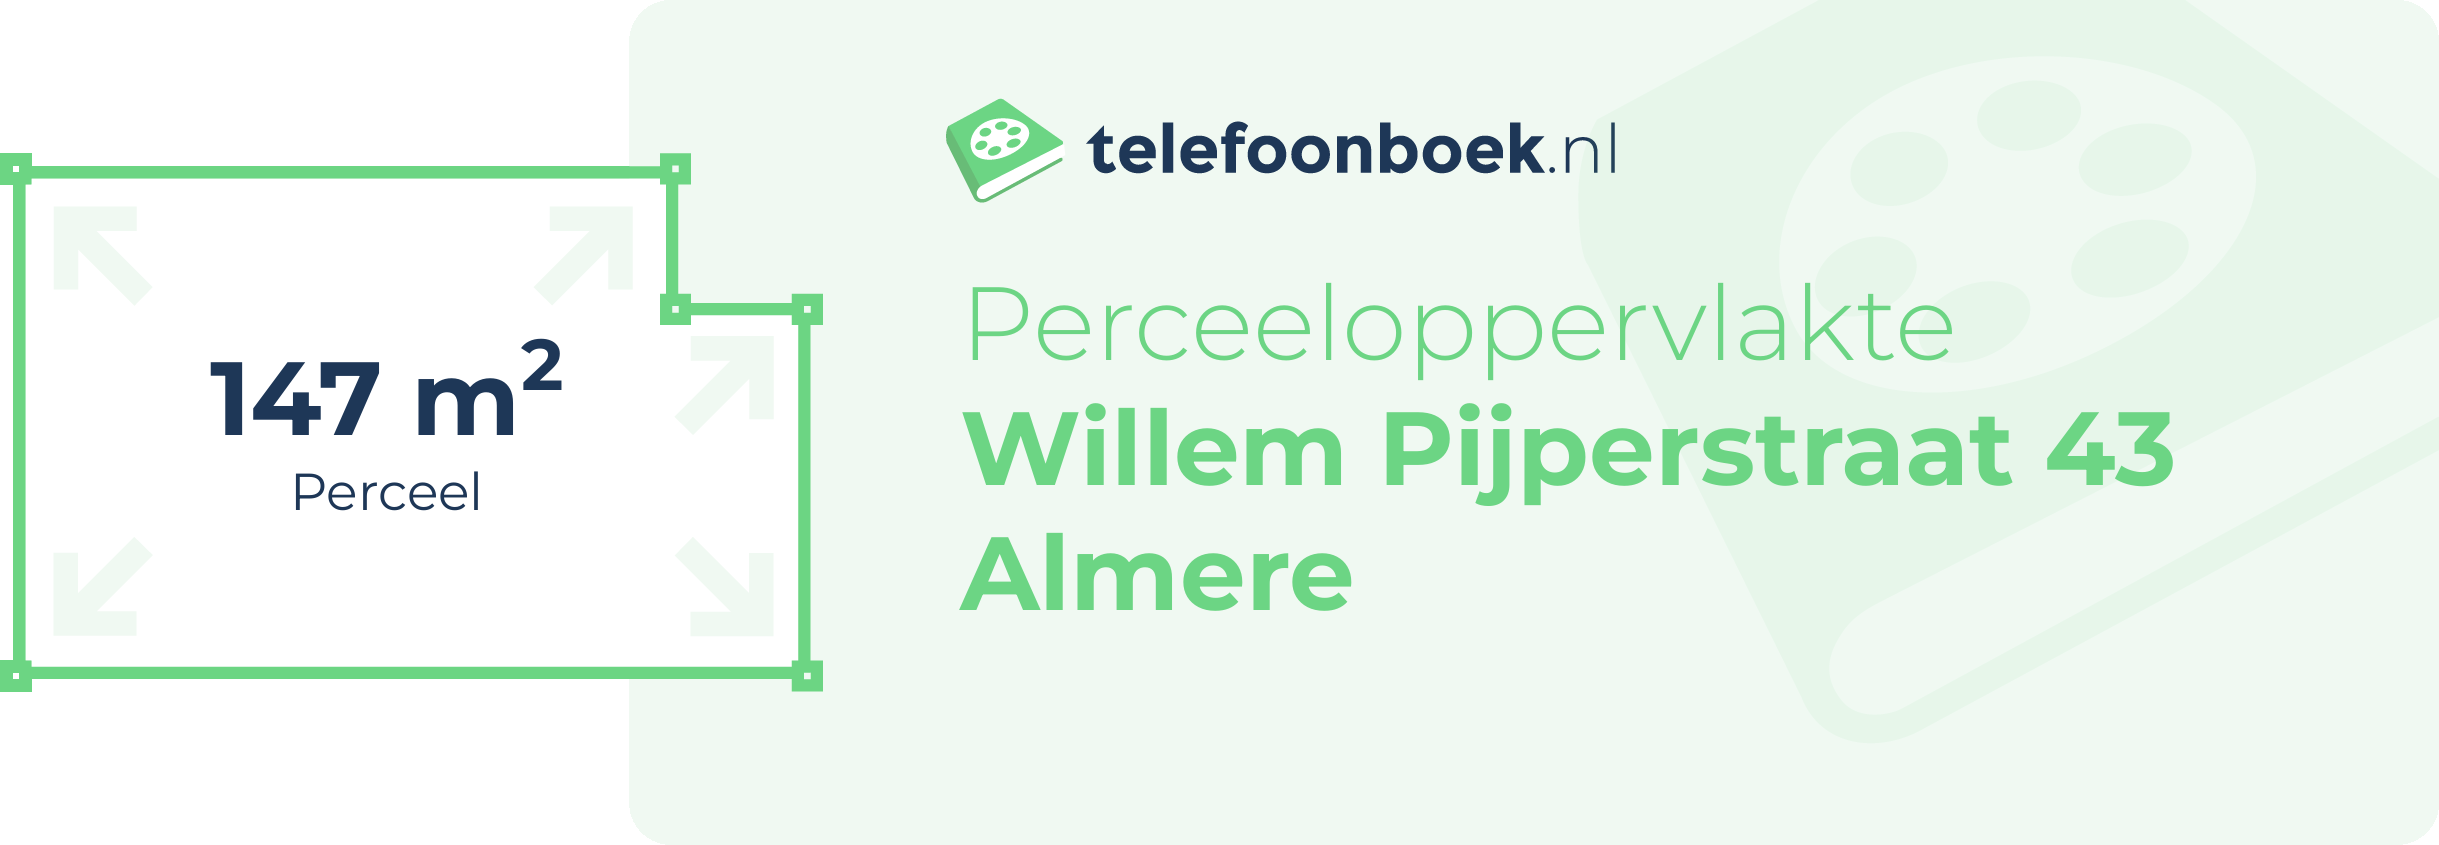 Perceeloppervlakte Willem Pijperstraat 43 Almere